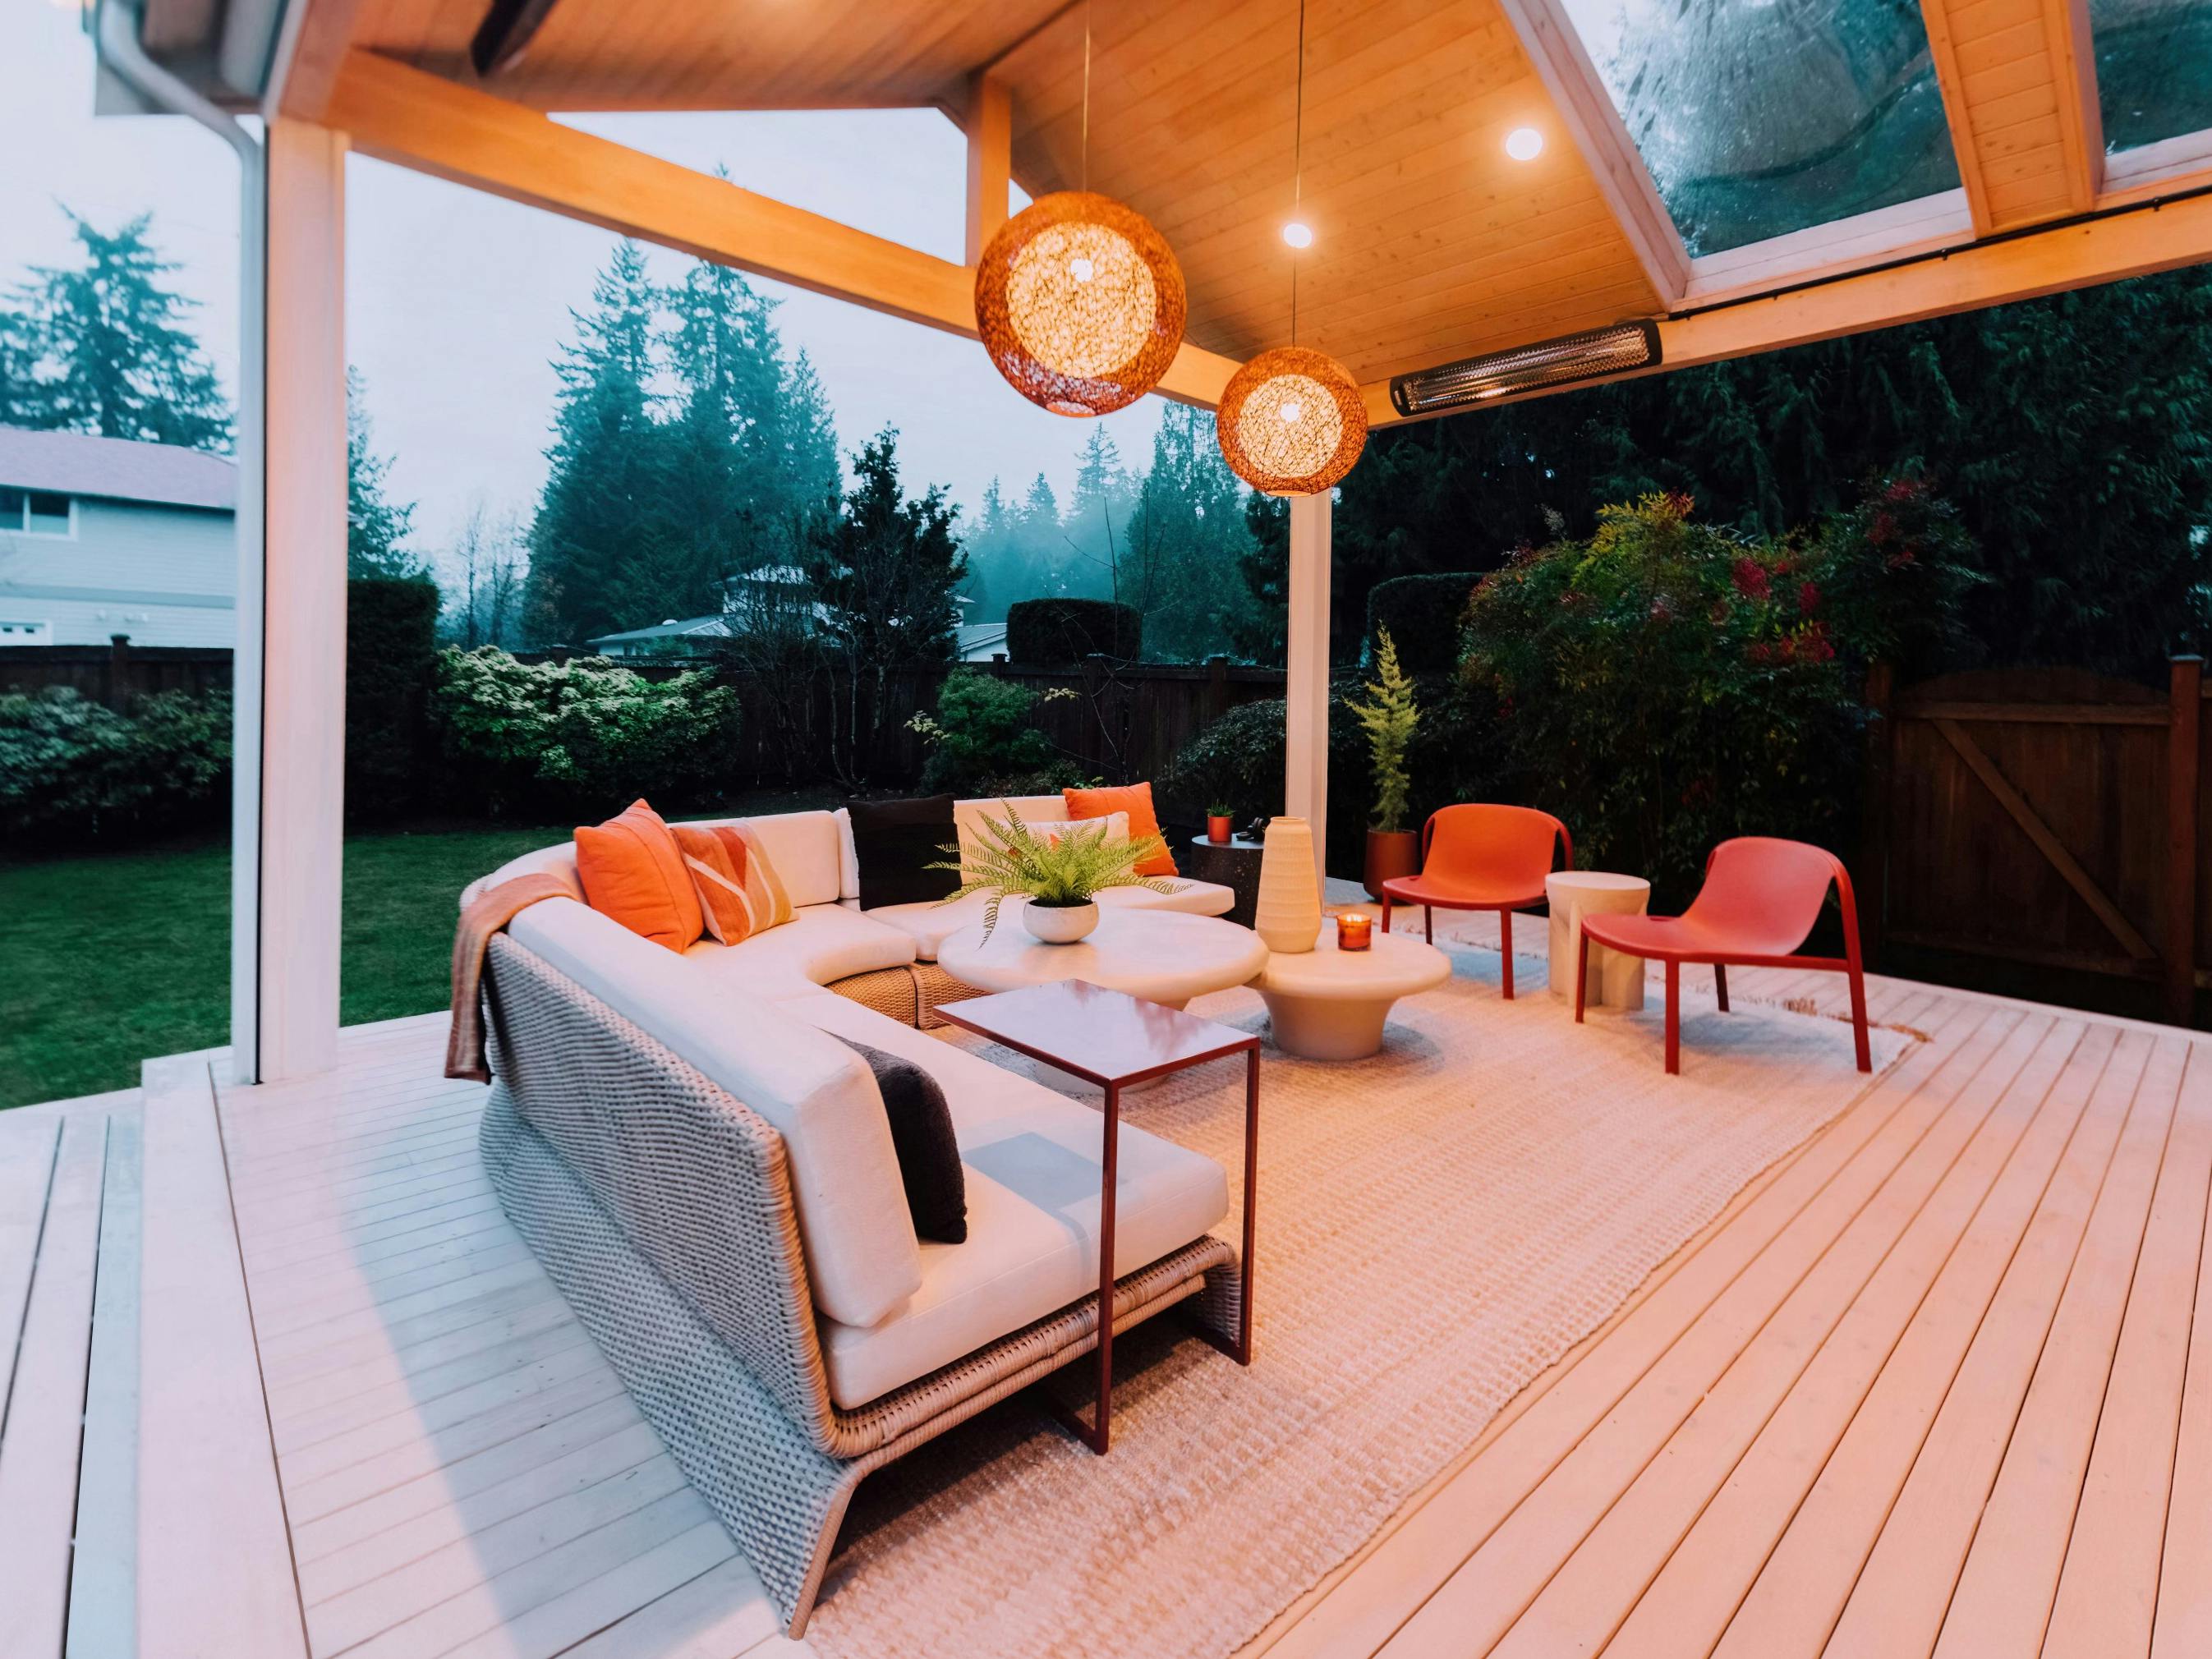 Outdoor retreat designed by Persimmon Design